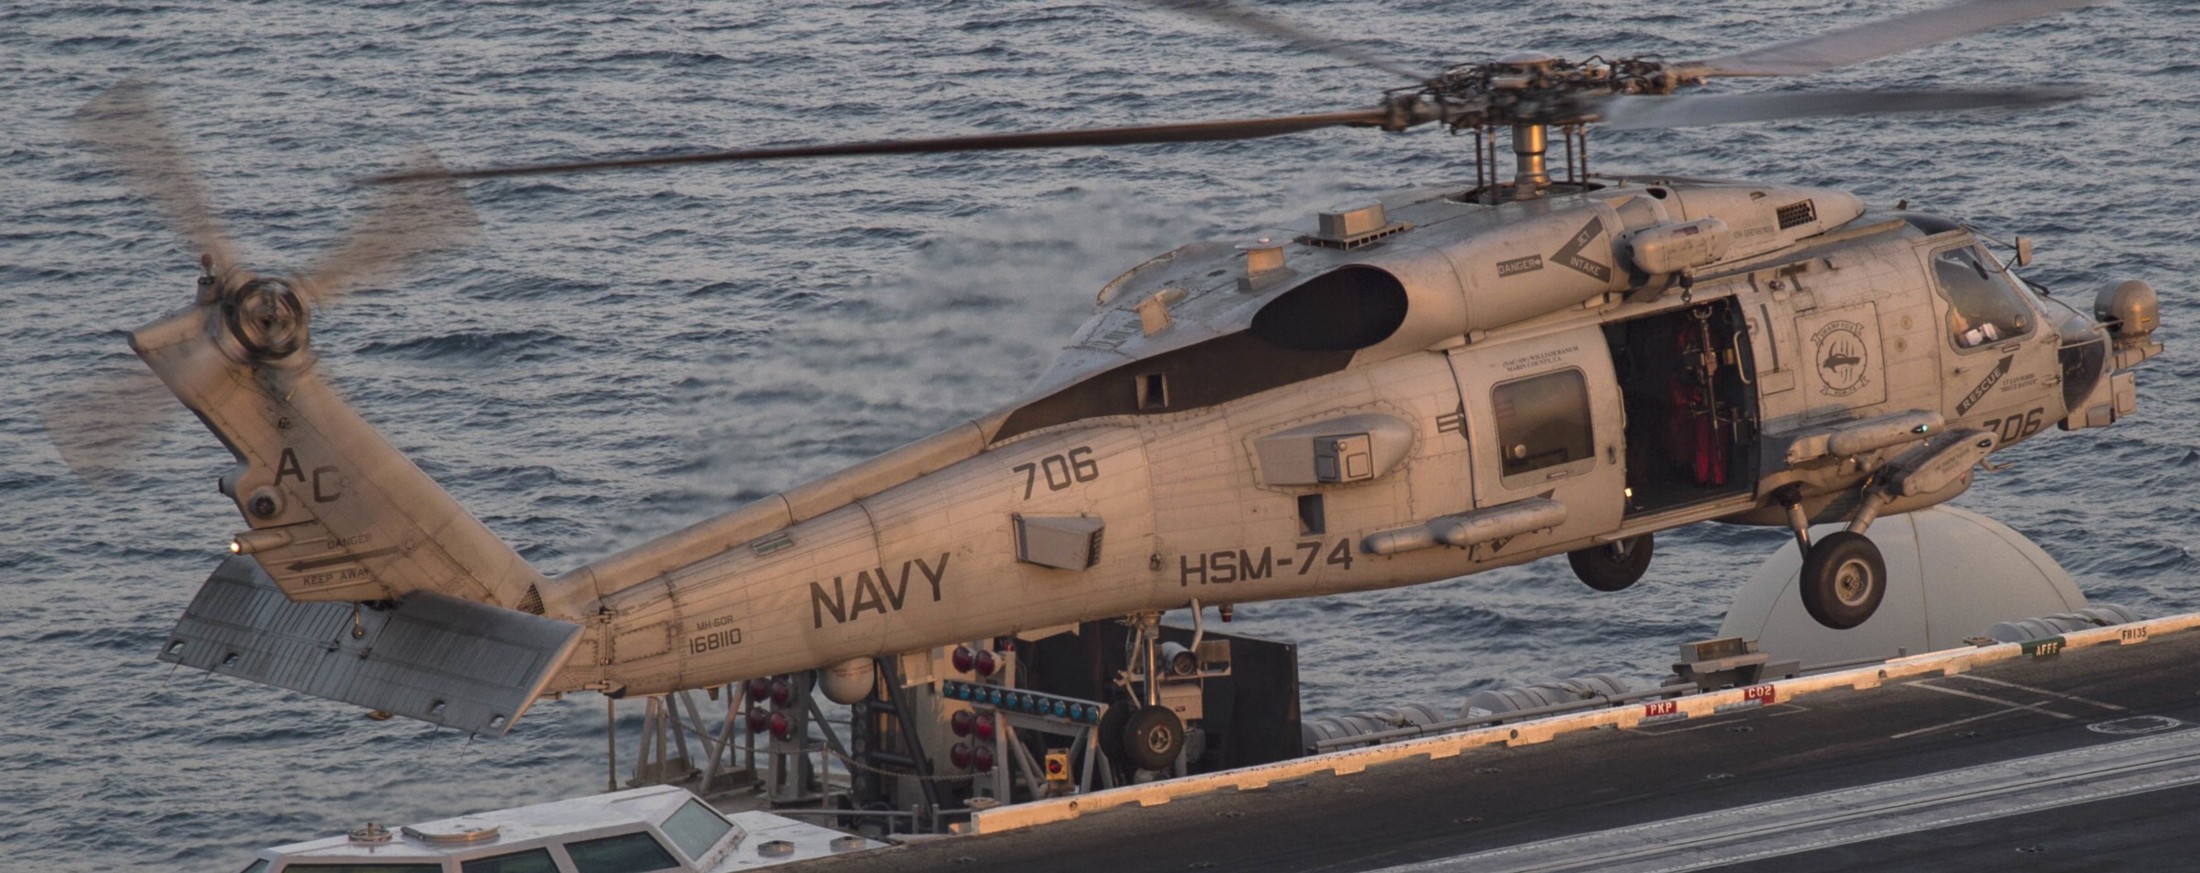 hsm-74 swamp foxes helicopter maritime strike squadron mh-60r seahawk cvw-3 cvn-69 uss dwight d. eisenhower 55